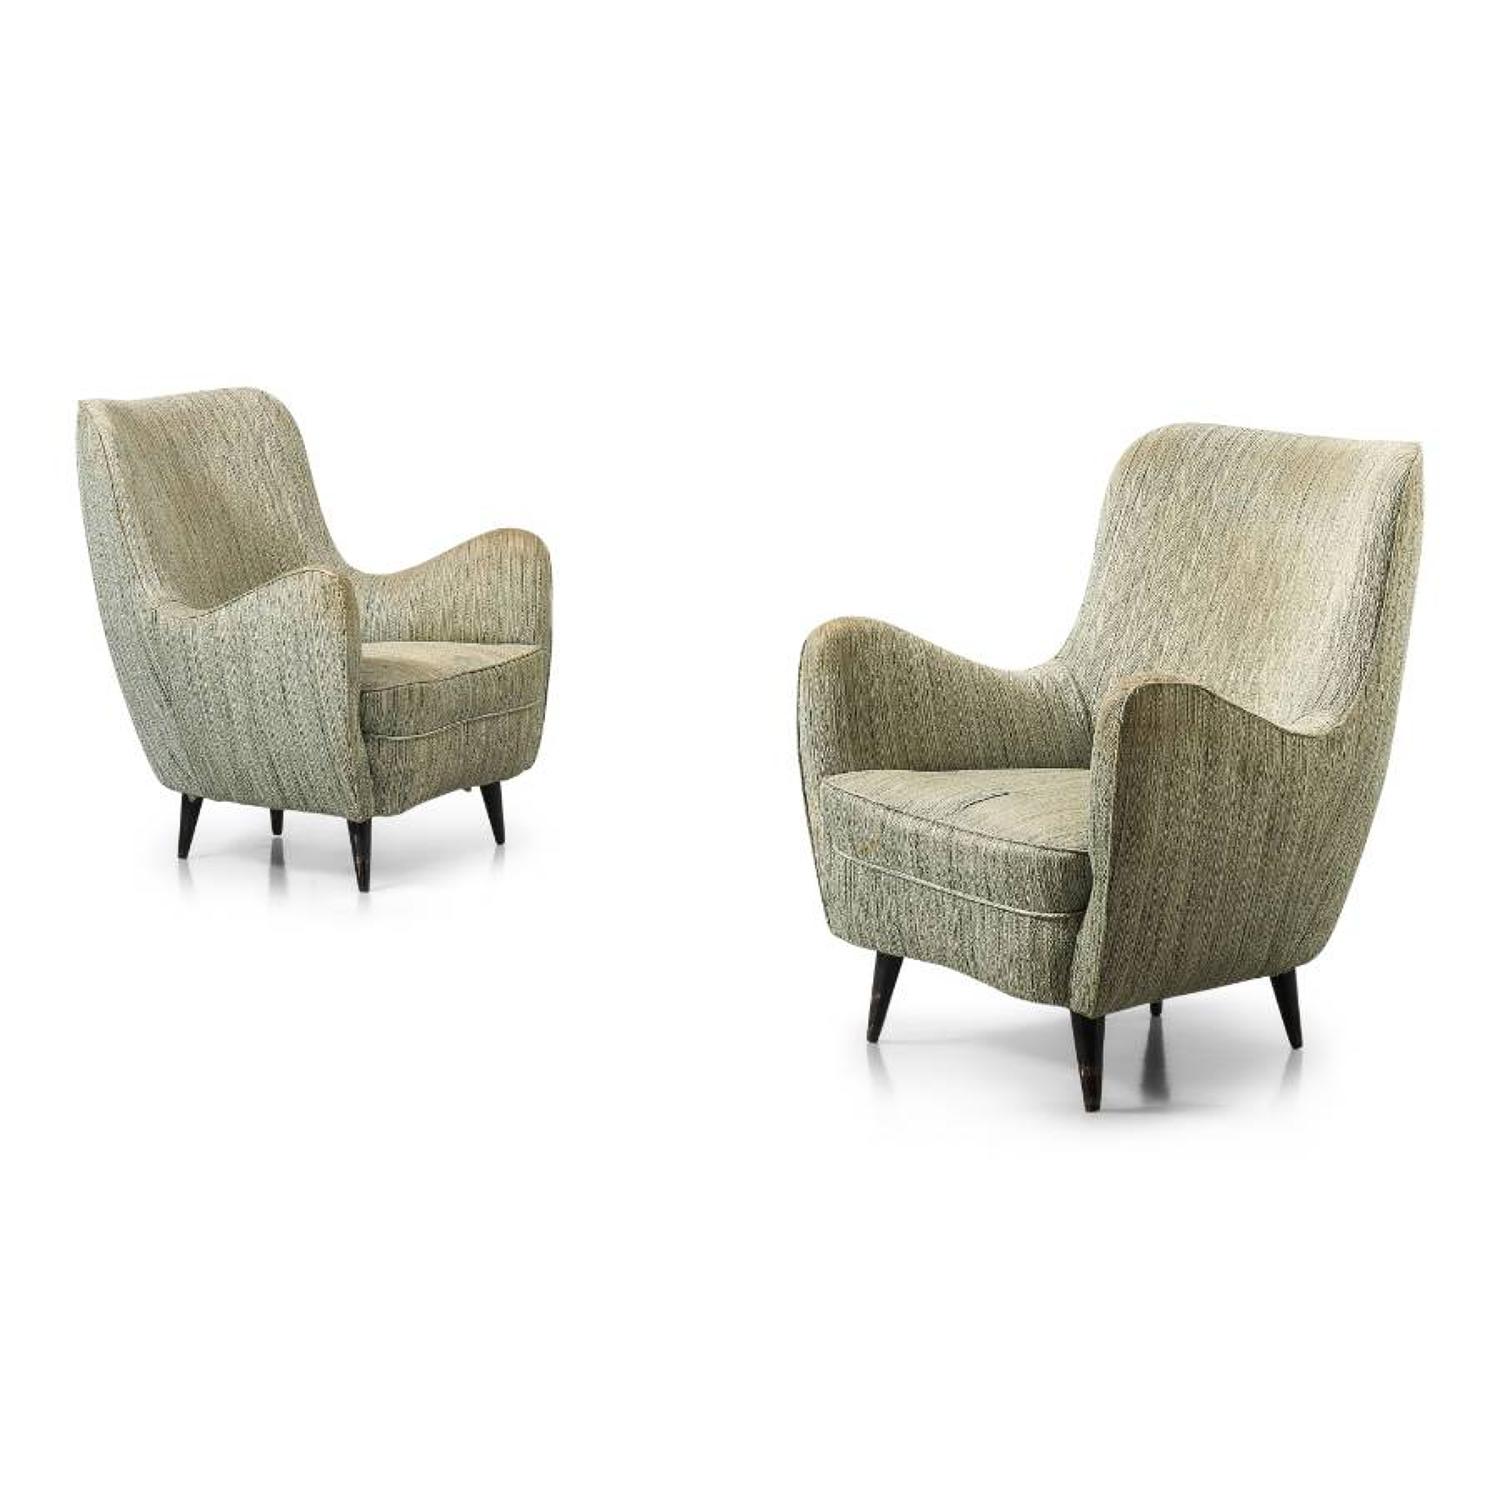 A pair of 1950s Italian armchairs